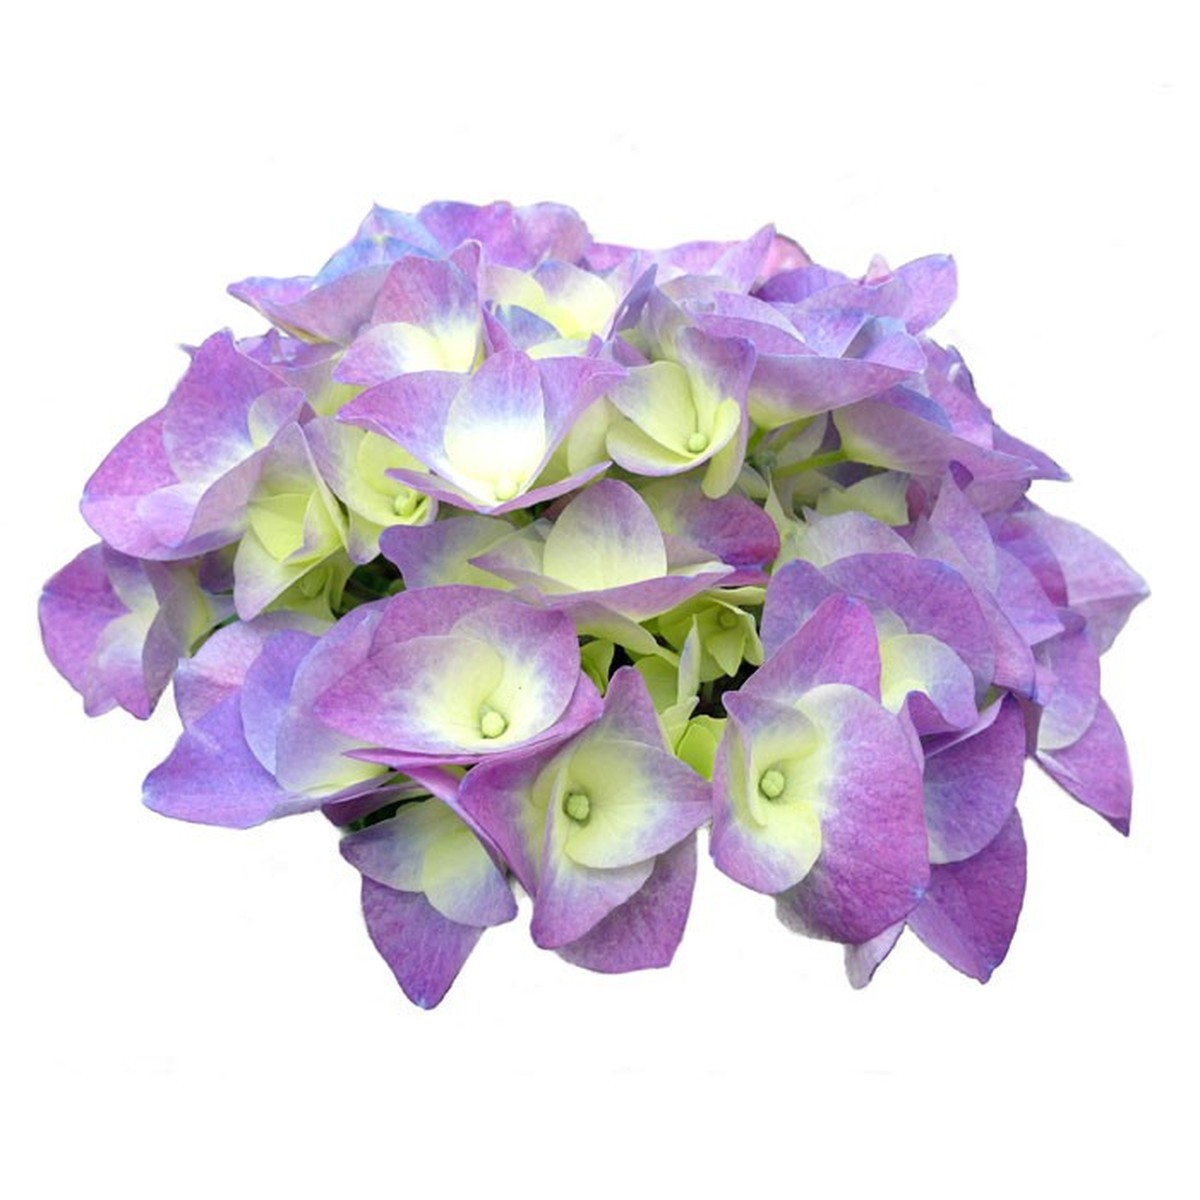   Hydrangea macrophylla 'Berlin Bleu'®  Pot 21 cm